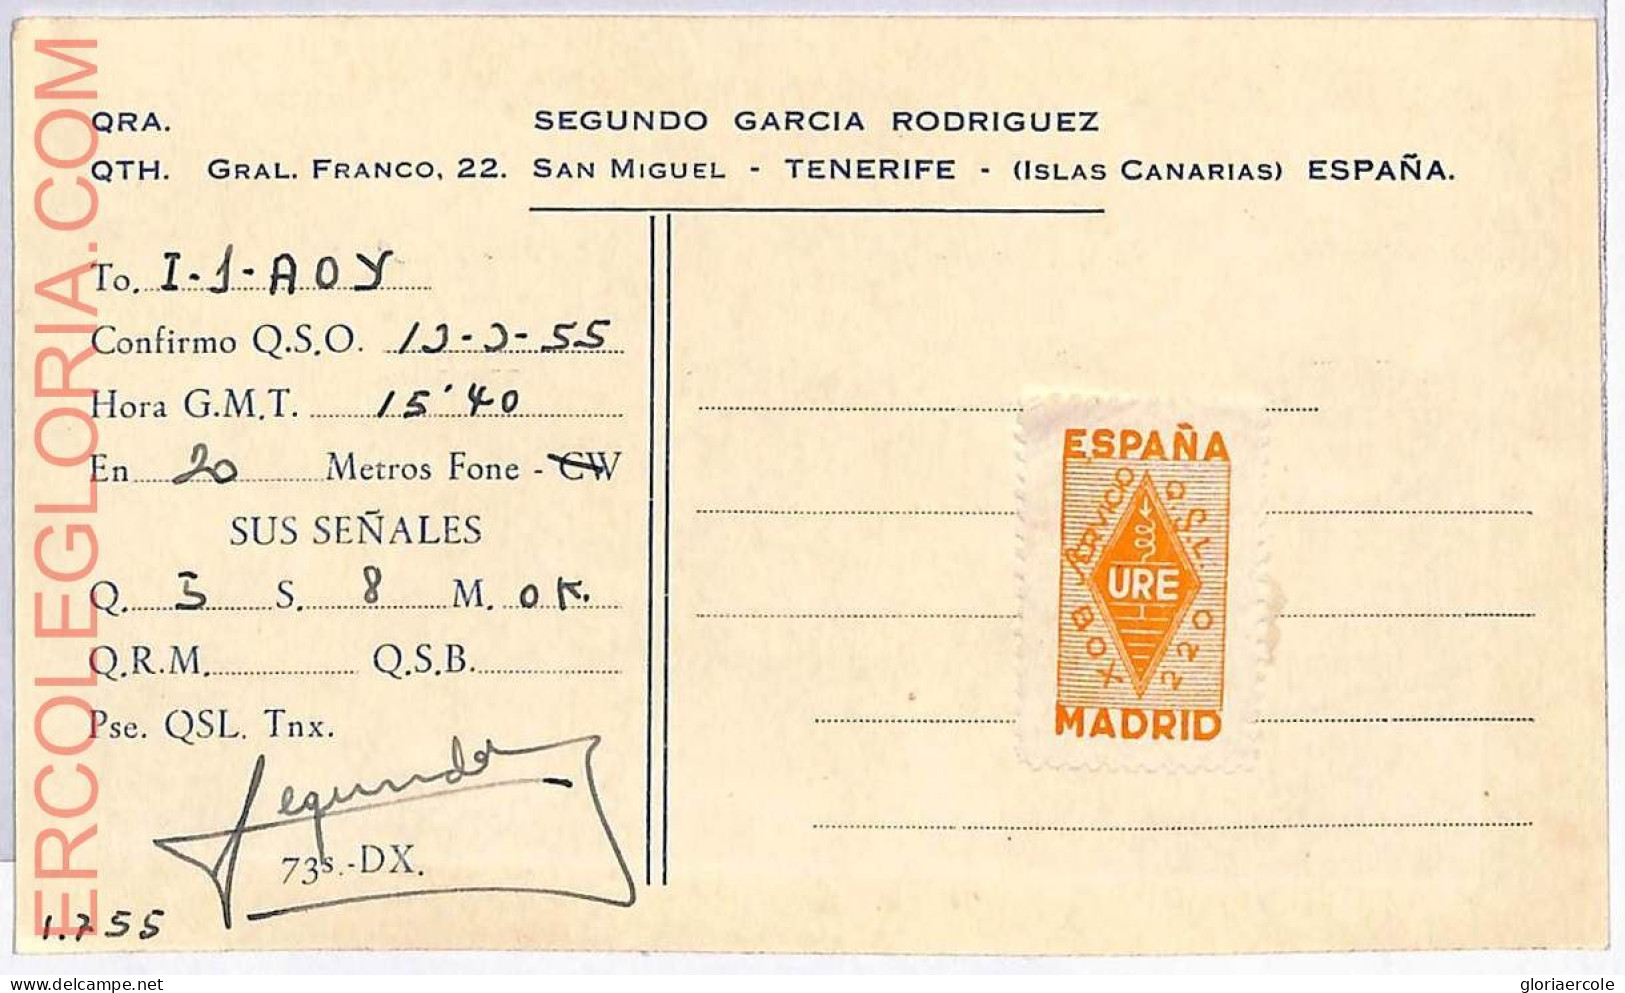 Ad9257 - SPAIN - RADIO FREQUENCY CARD  - Madrid -  1955 - Radio